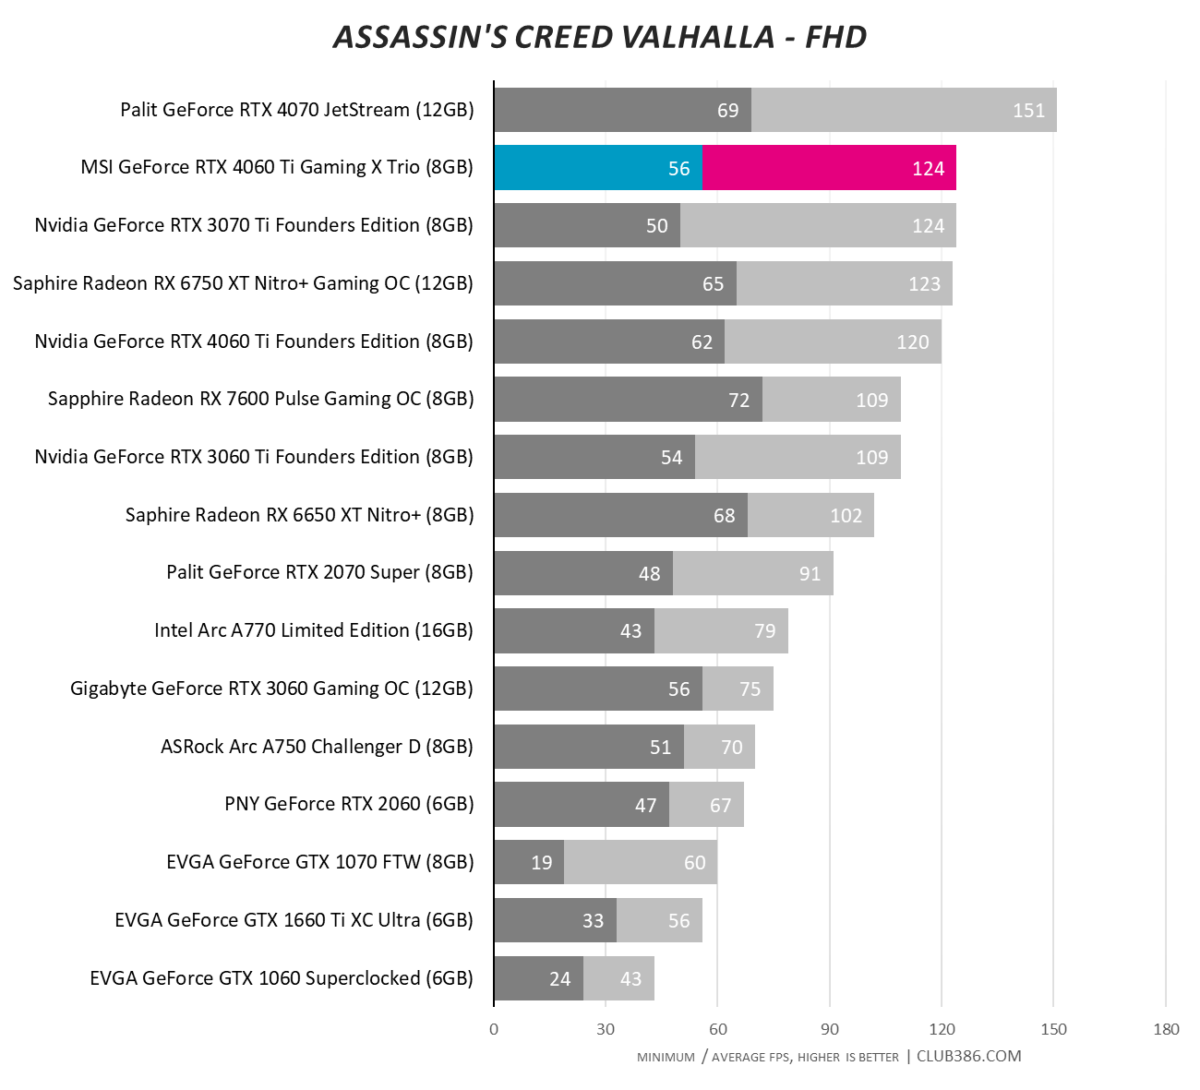 MSI GeForce RTX 4060 Ti Gaming X Trio - Assassin's Creed Valhalla - FHD